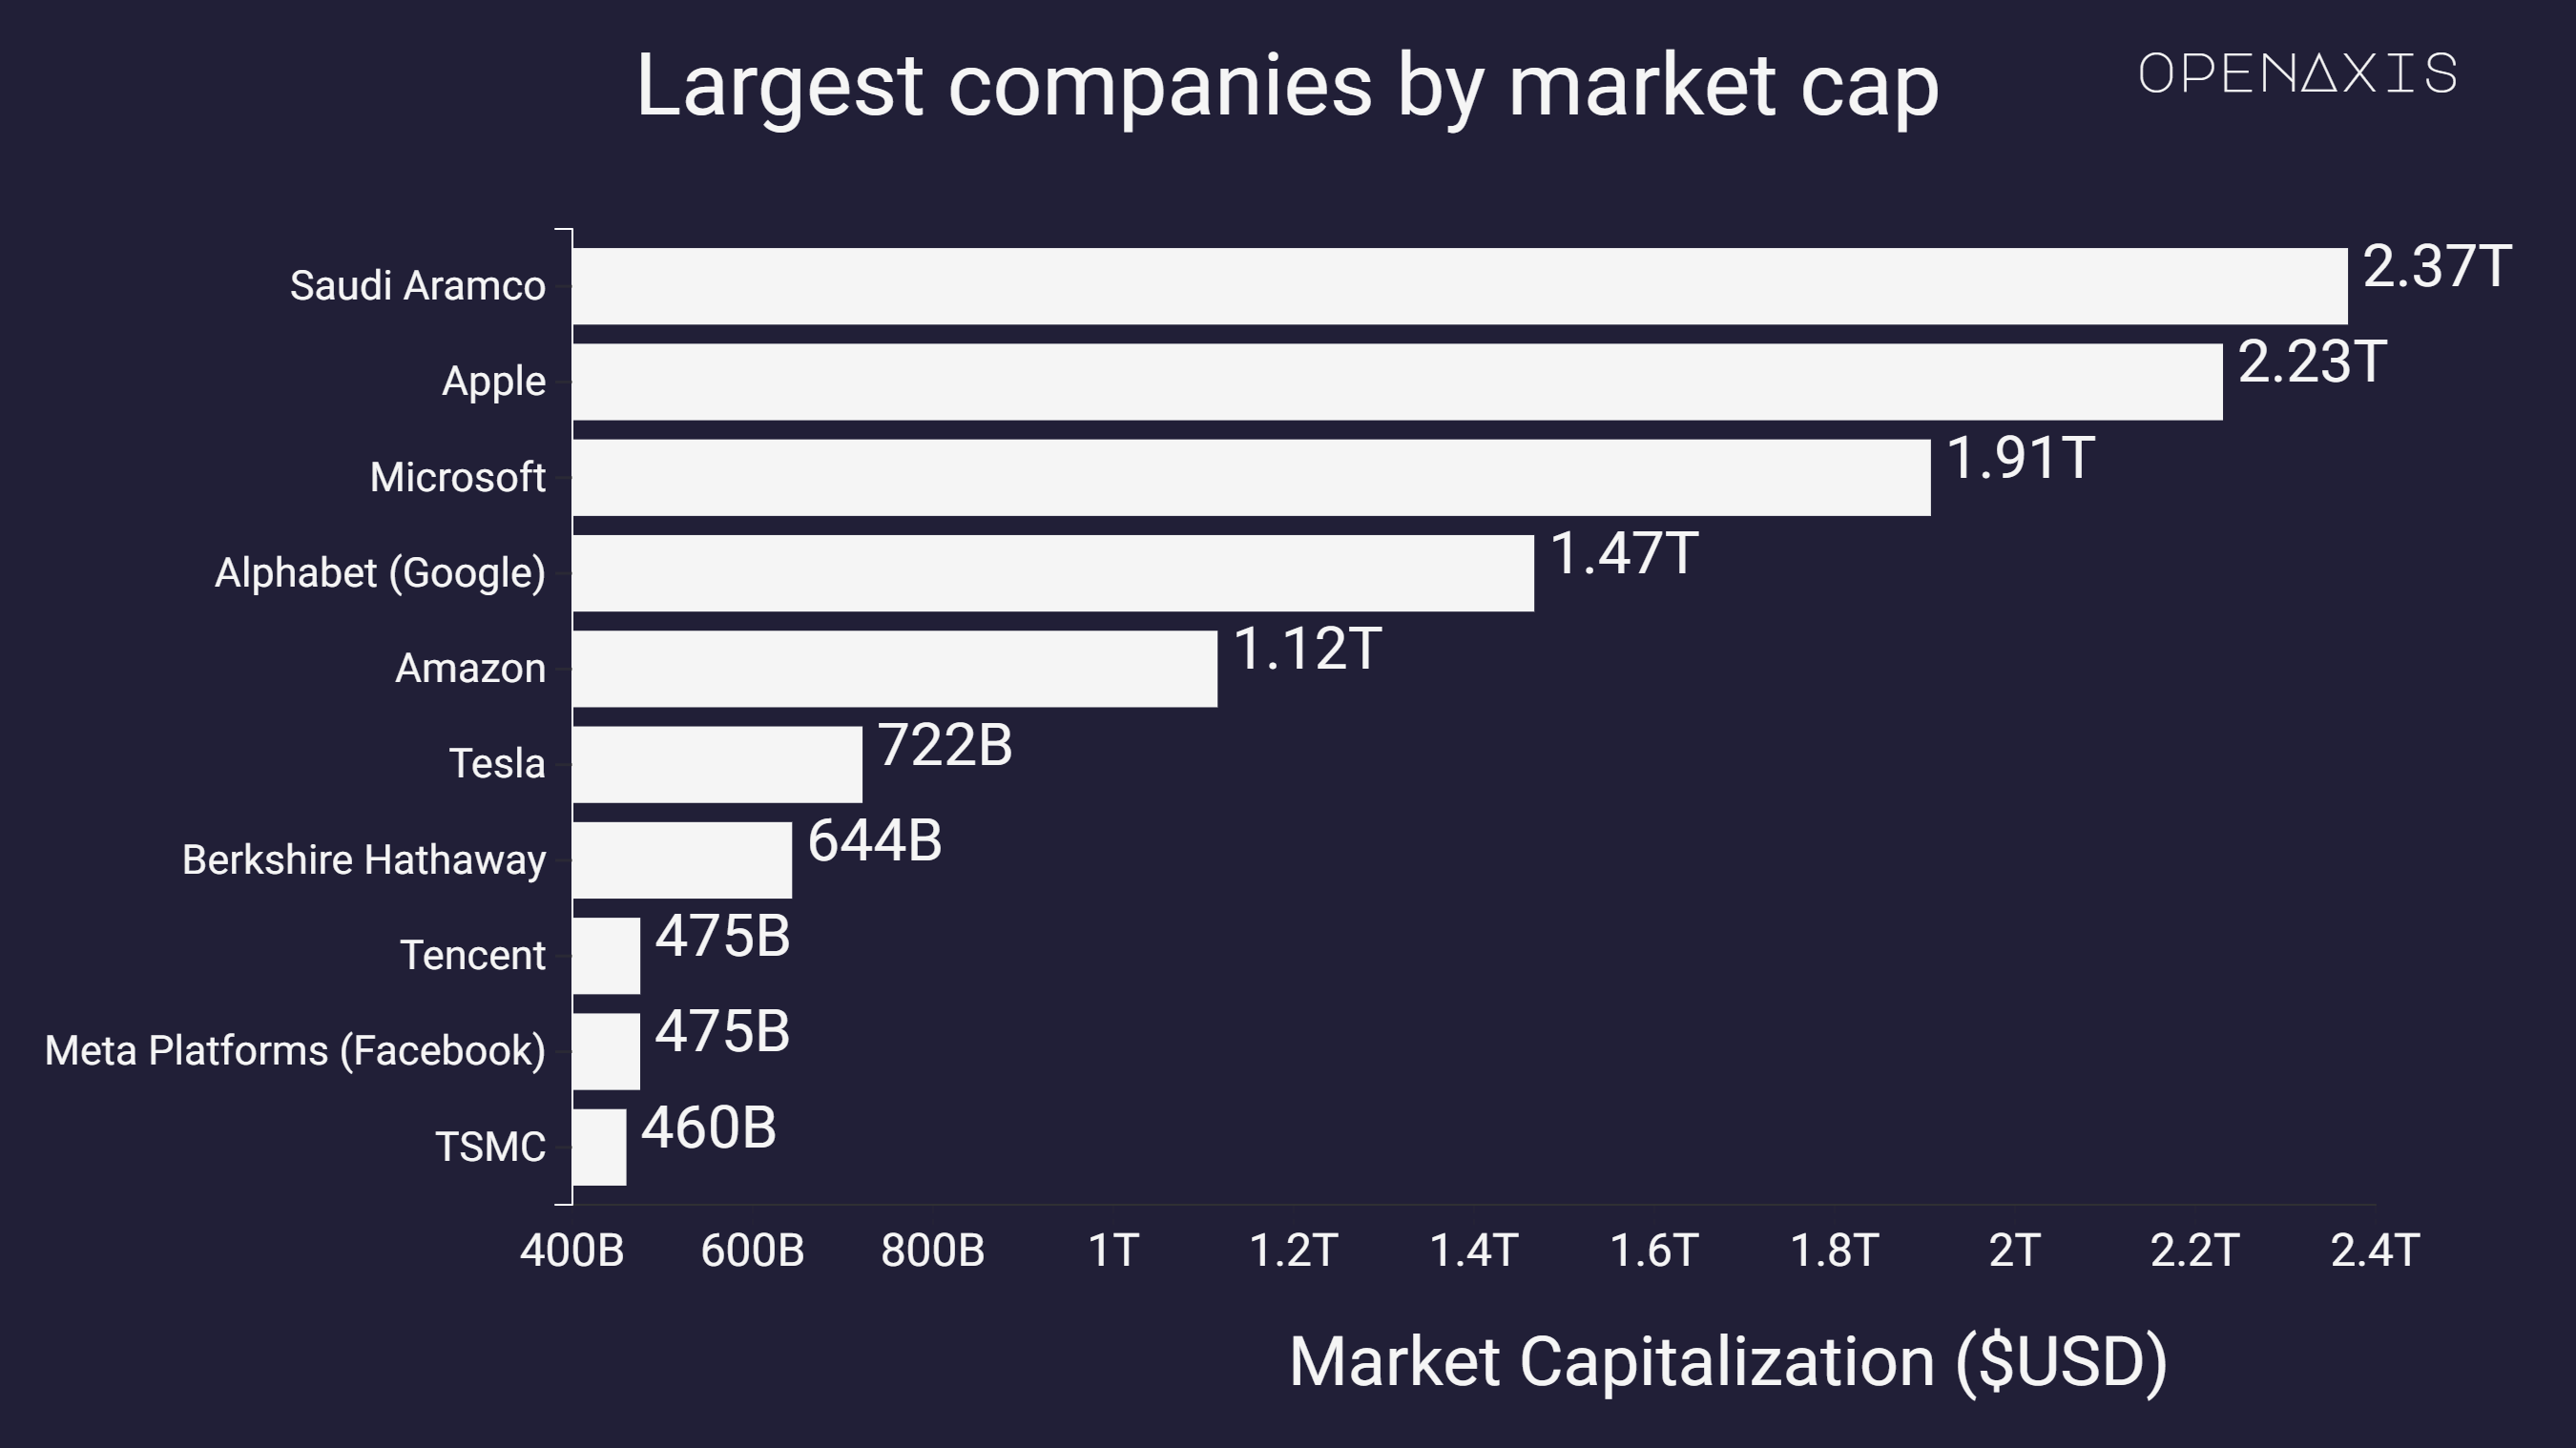 "Largest companies by market cap"